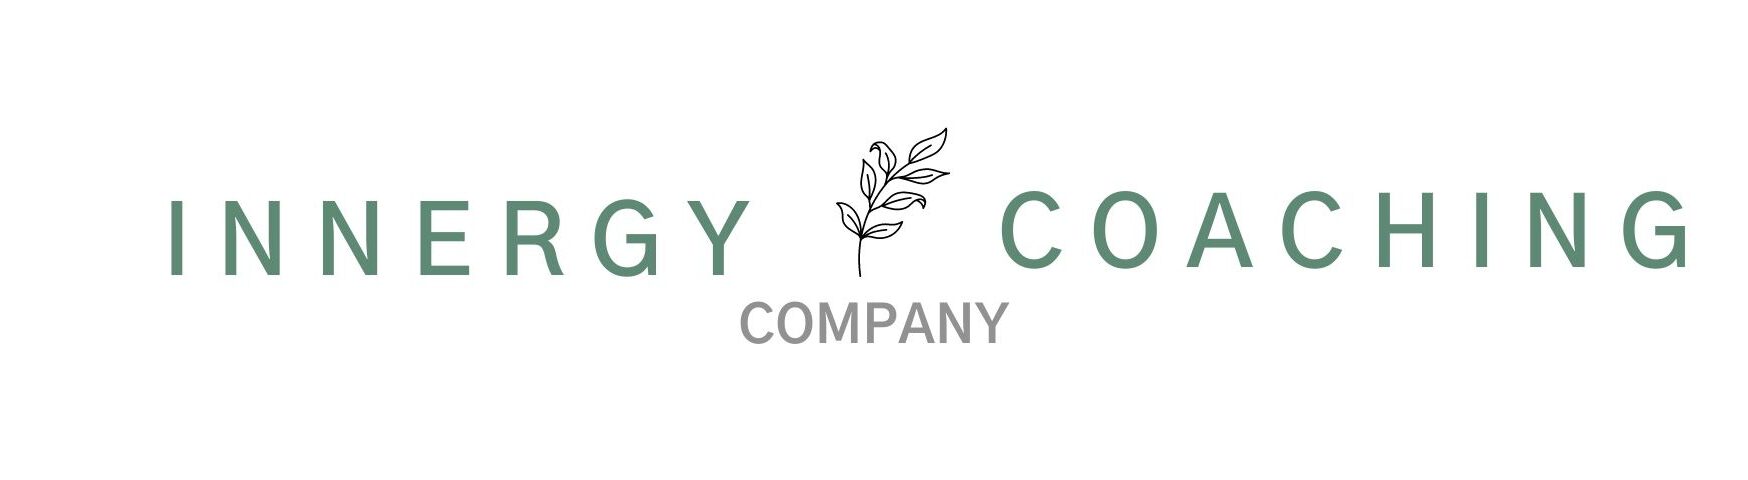 Innergy-coaching-company-logo